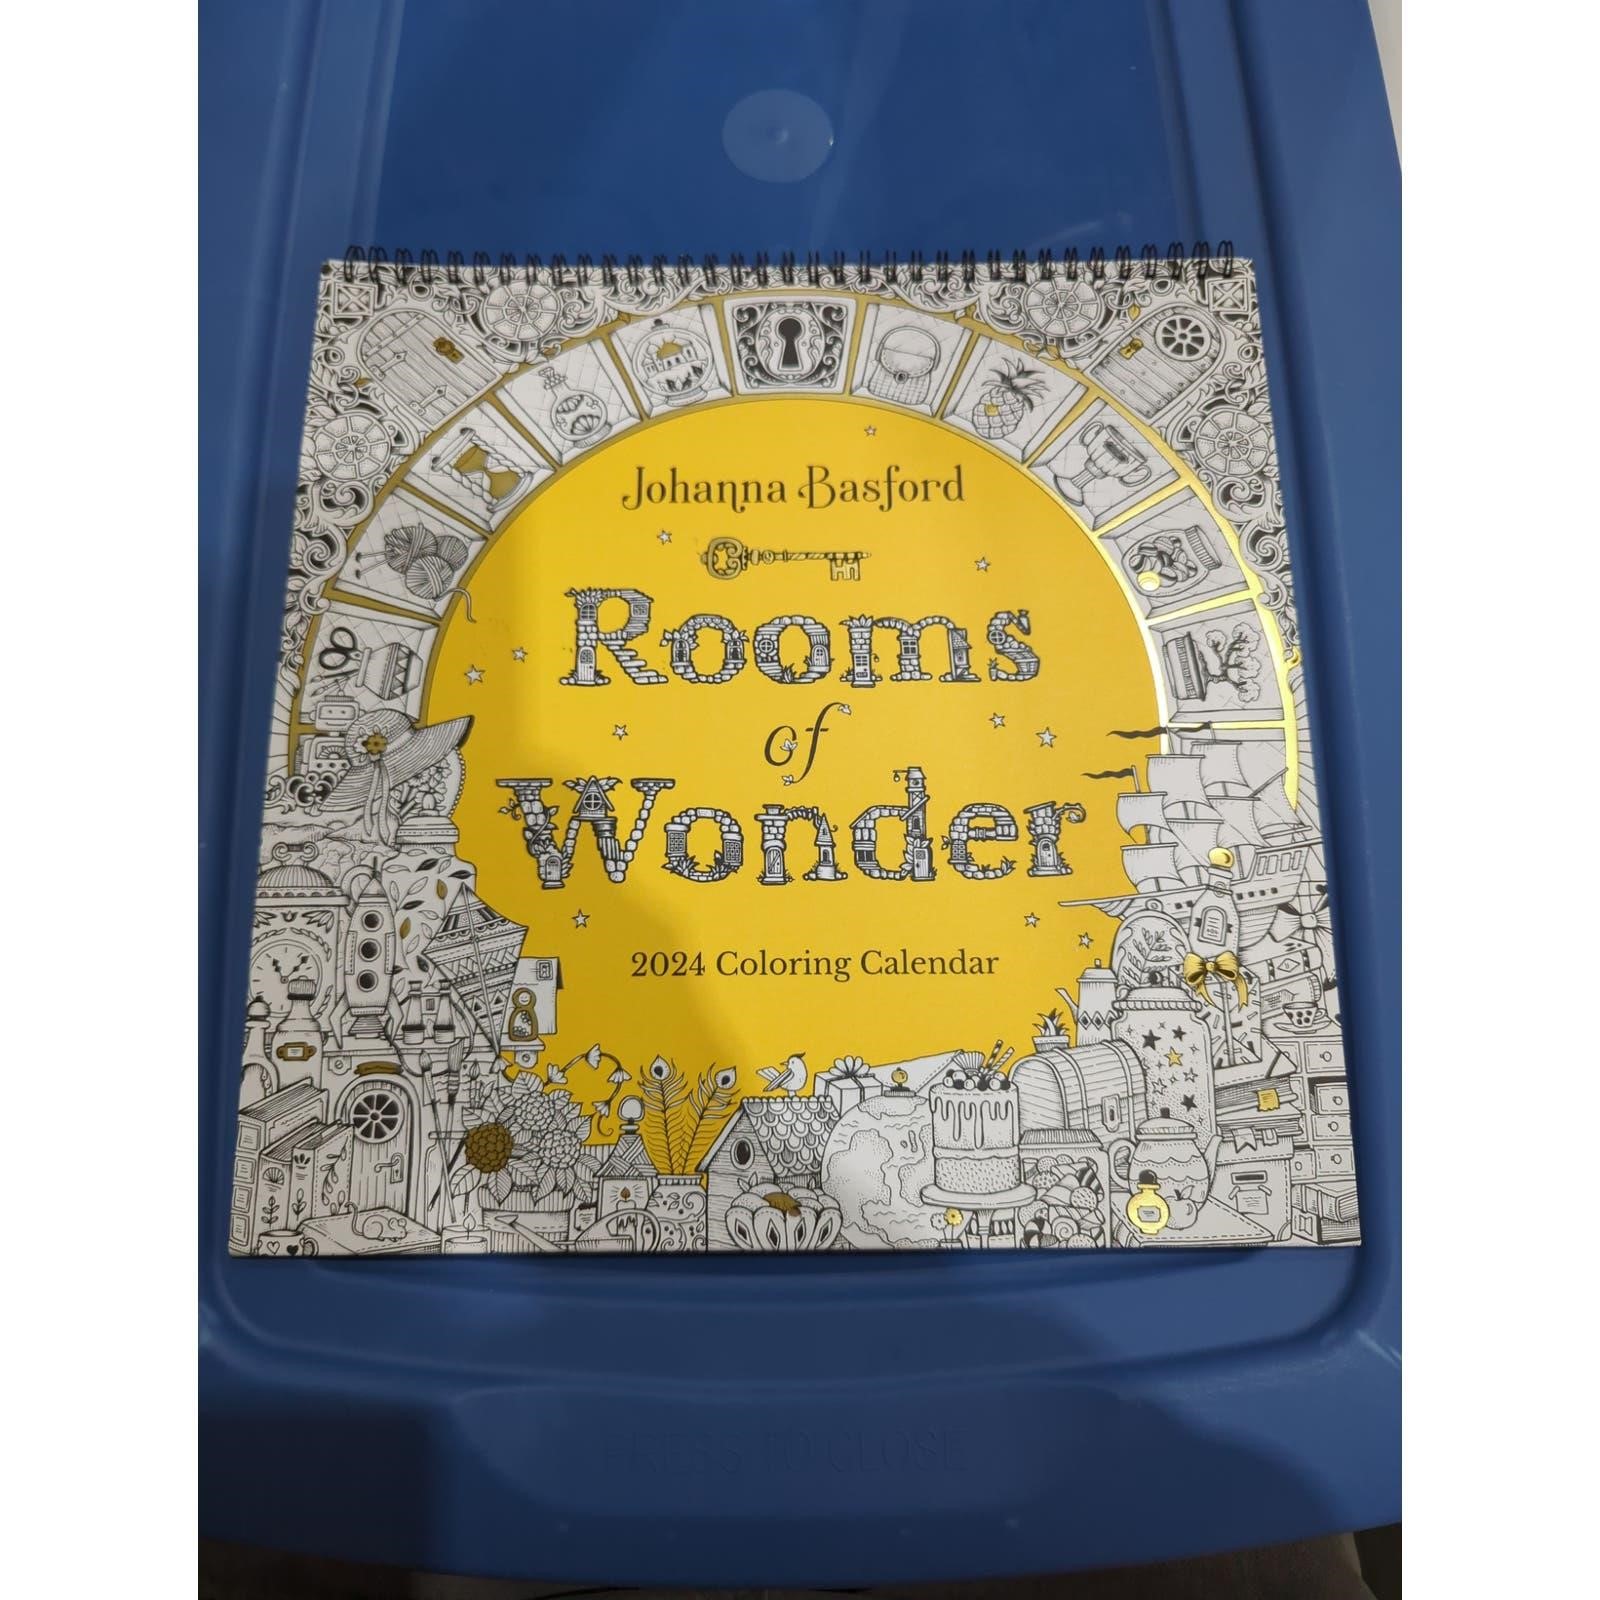 Rooms of wonder coloring calendar